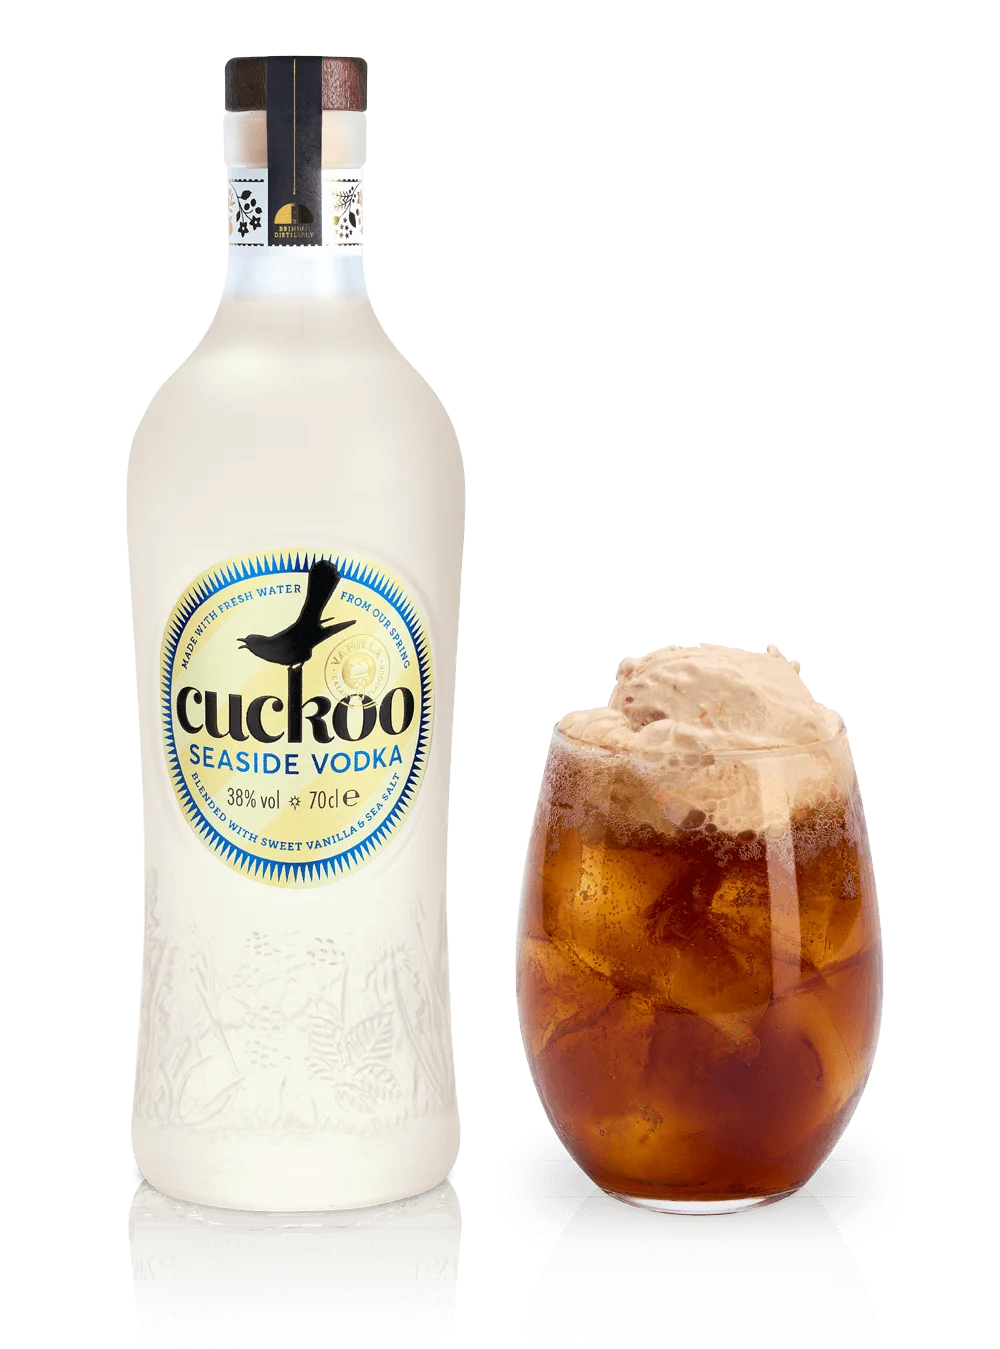 cuckoo seaside vodka